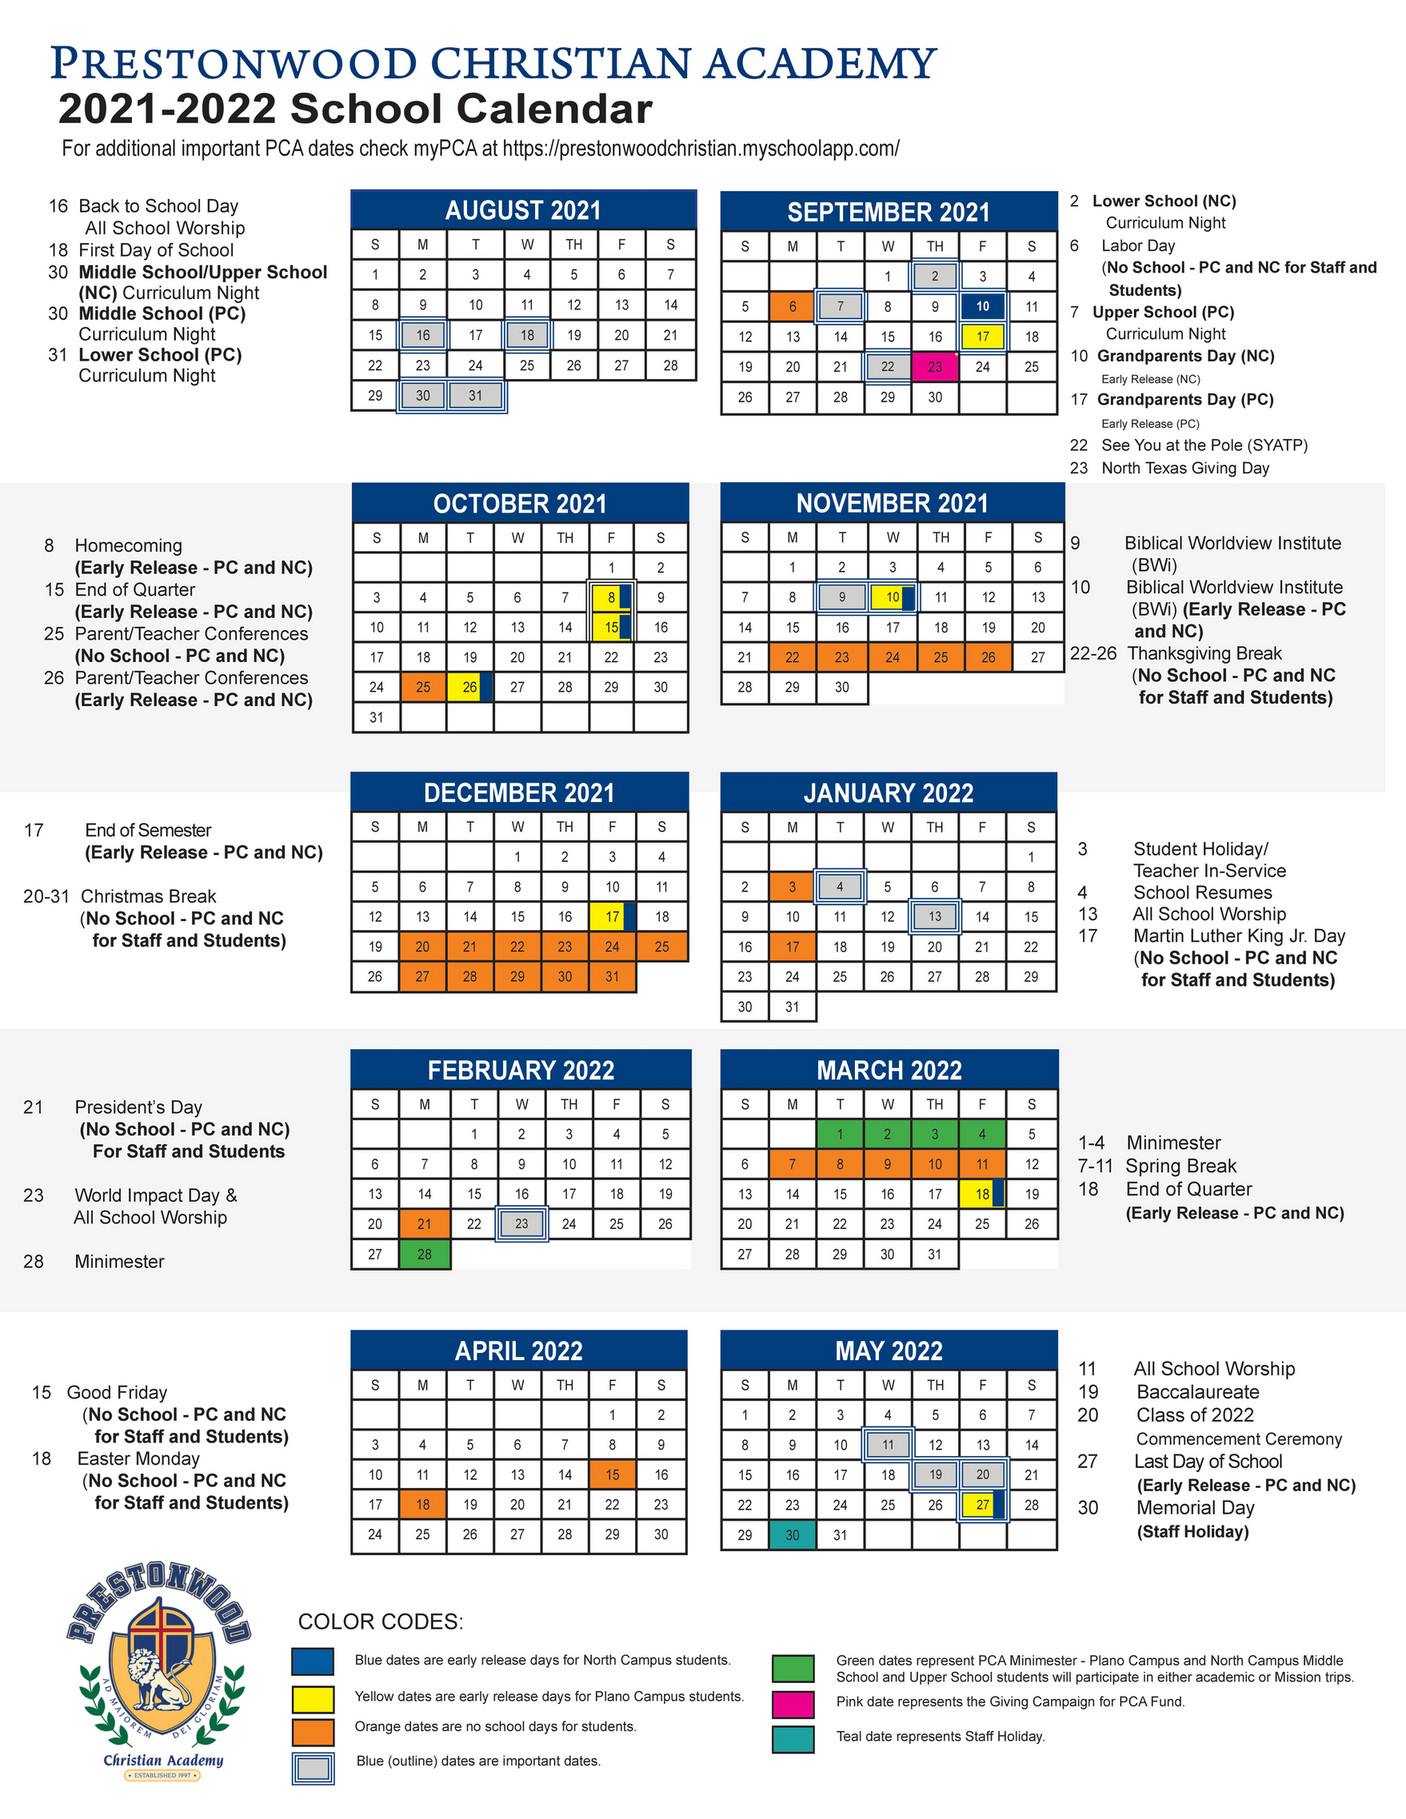 Prestonwood Christian Academy - PCA calendar 2021-22 - Page 1